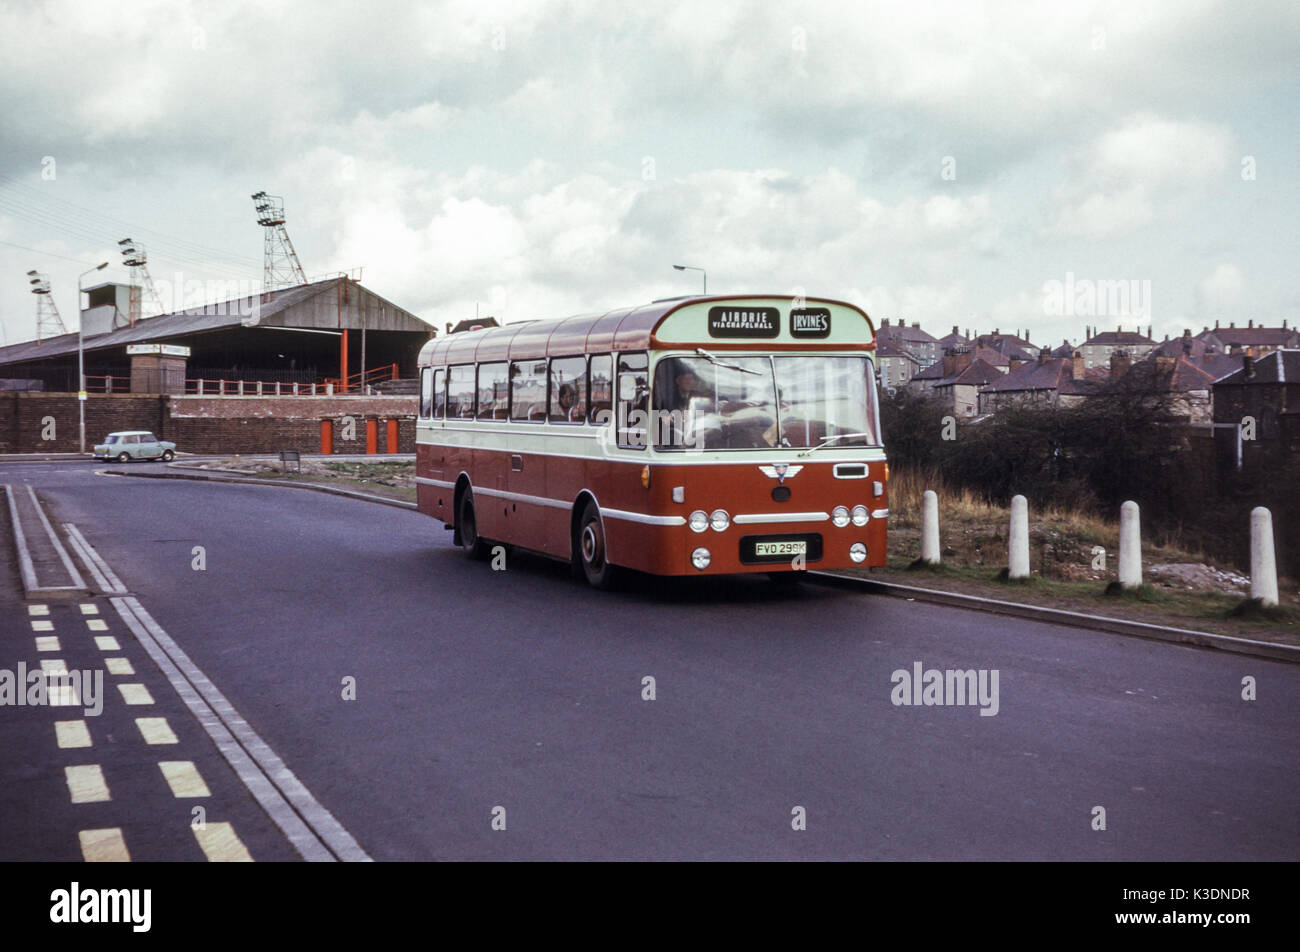 Escocia, Reino Unido - 1973: Vintage imagen de autobuses operan en 1973. Irvine Dependencia AEC (registro FVD 298K). Foto de stock